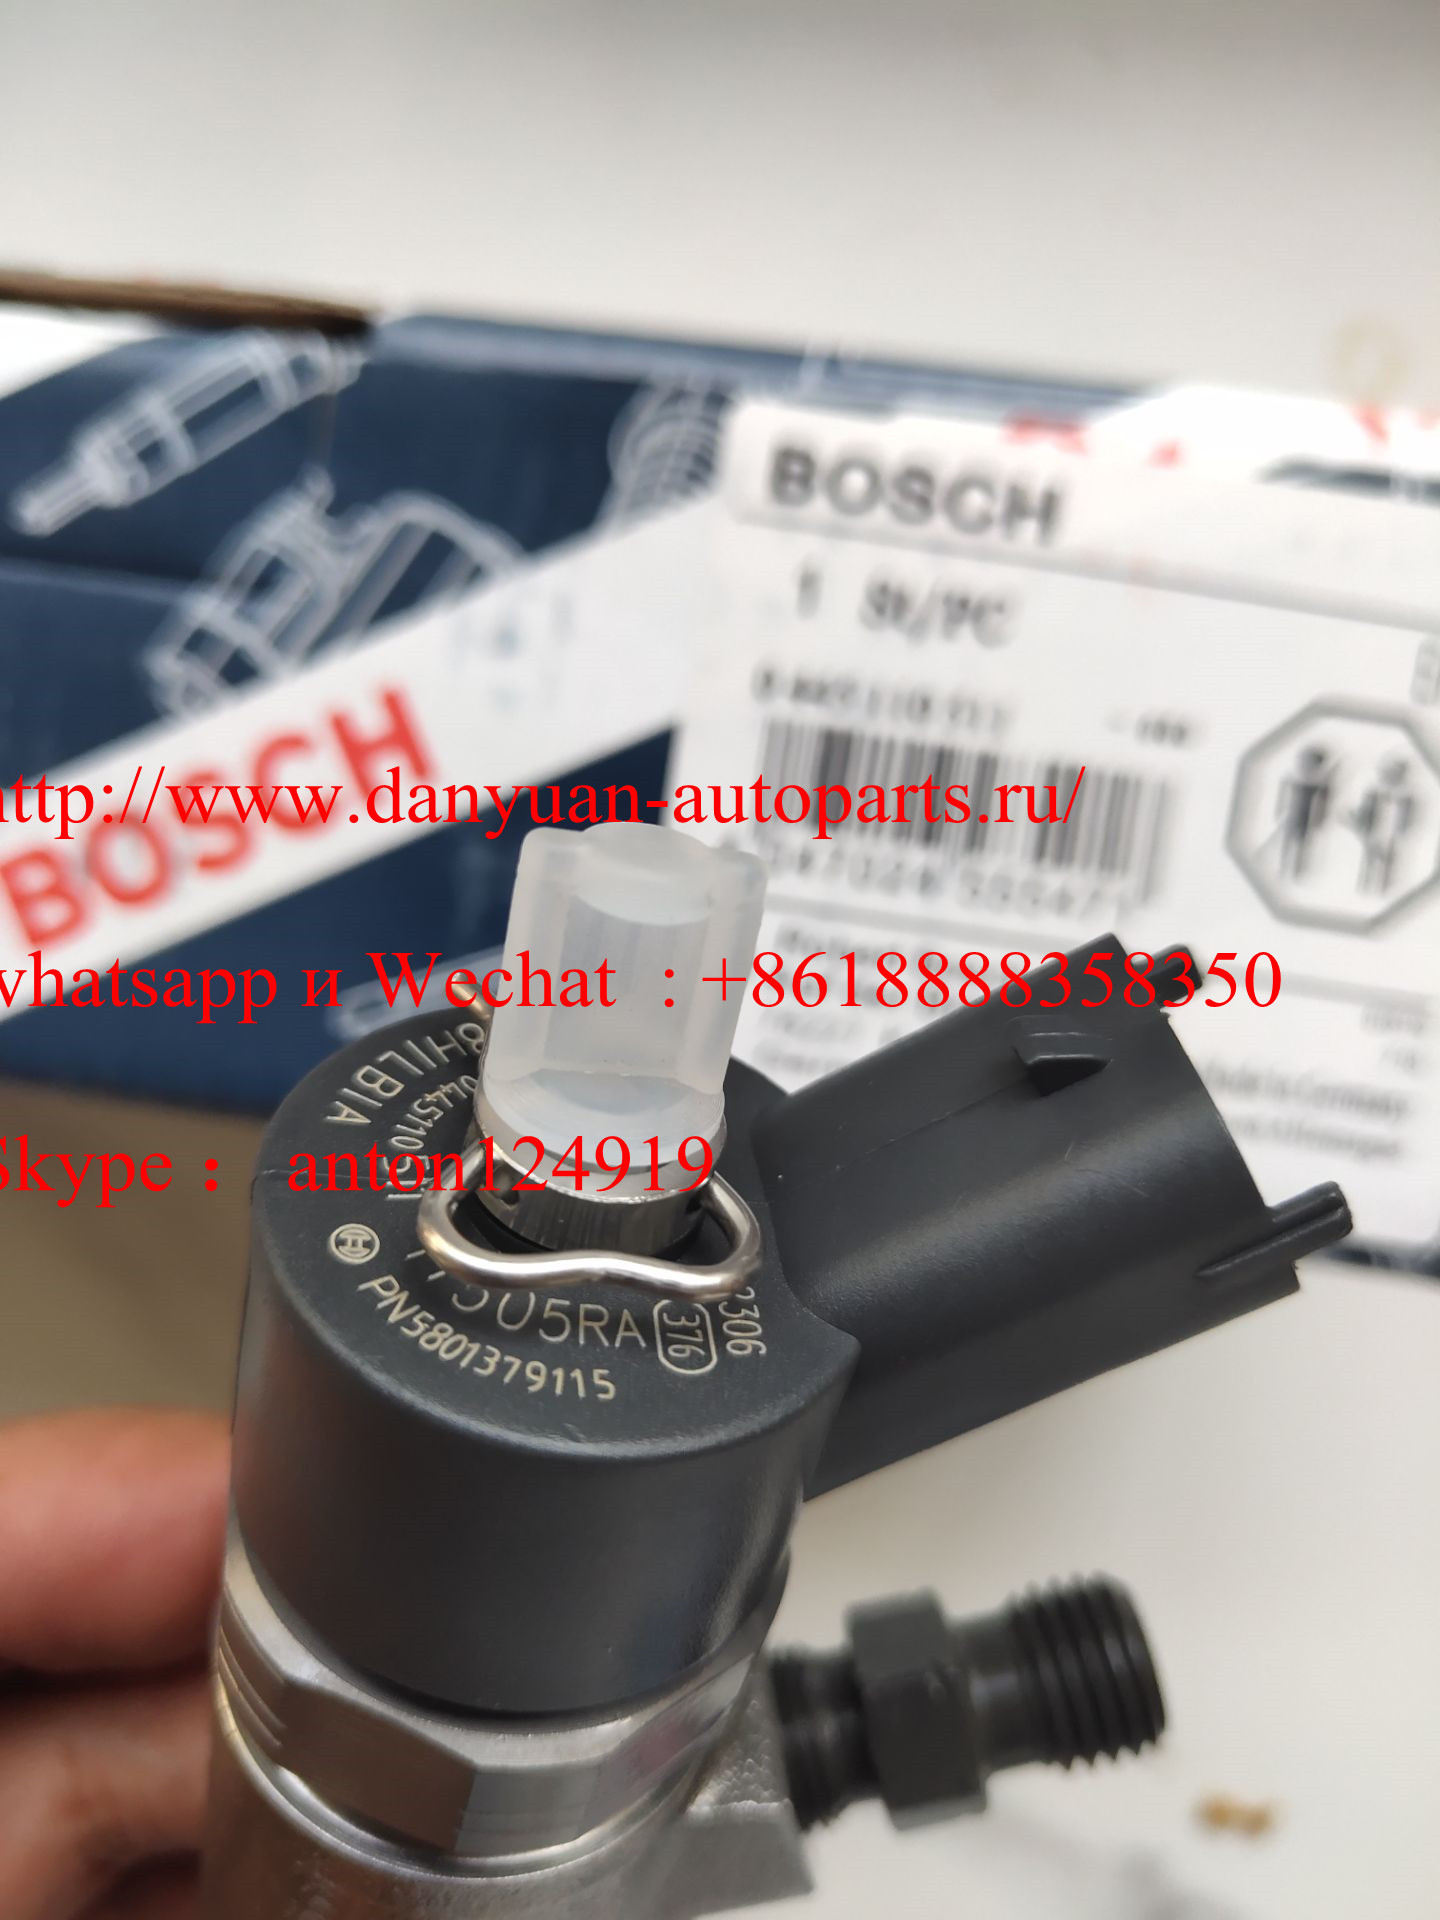 Форсунка CR (5801379115) (0445110511) (0 445 110 511) Bosch